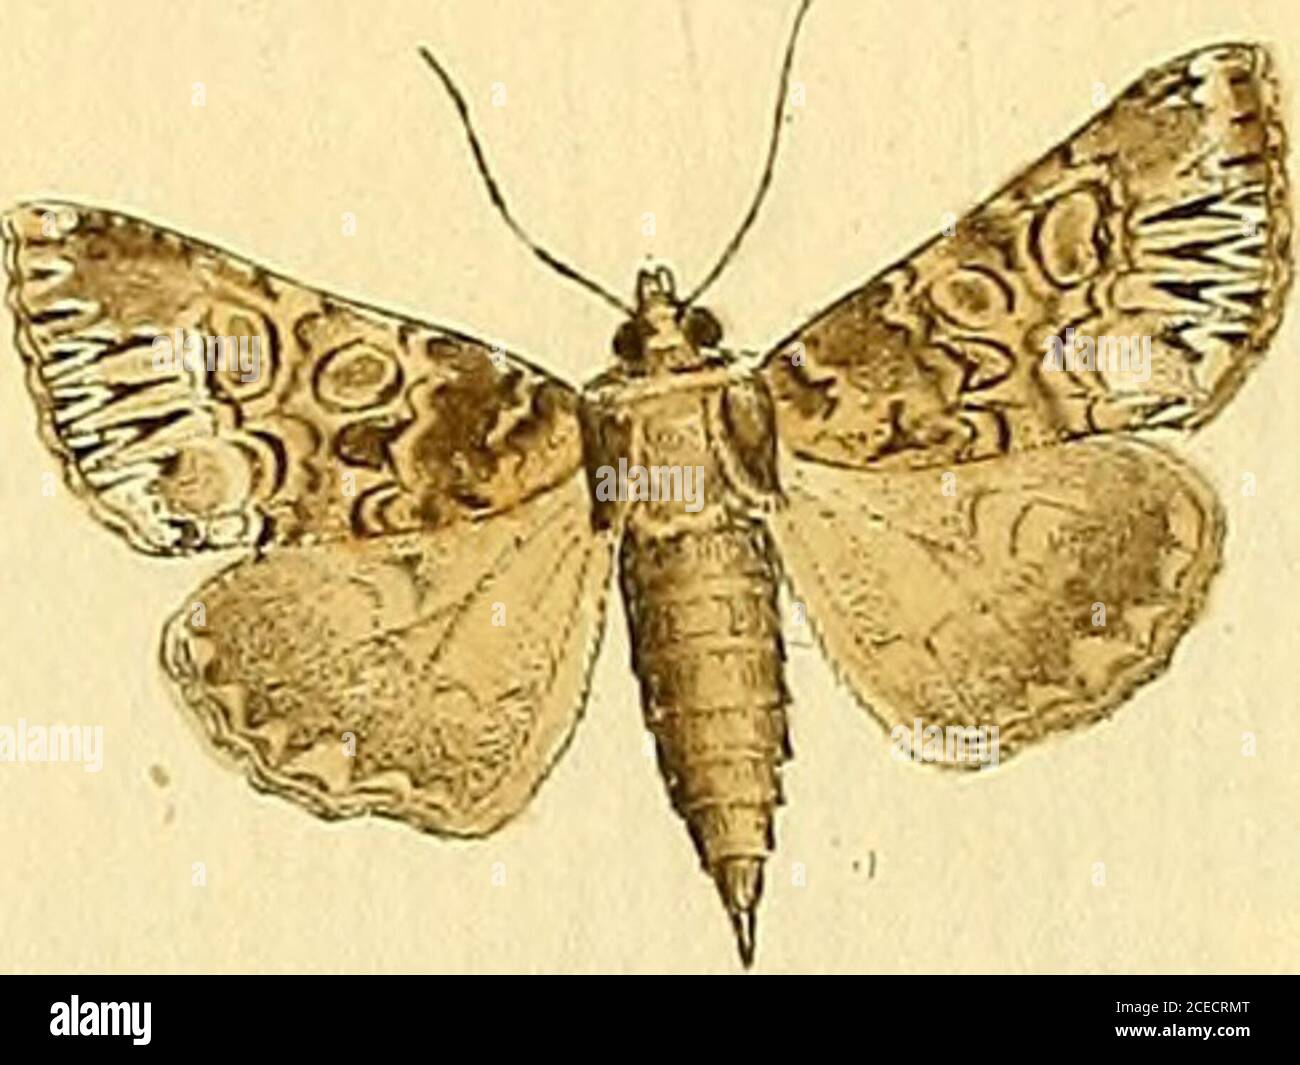 . Sammlung europscher Schmetterlinge, errichtet von Jacob Hner in Augsburg. SSS. /2/^//^d .^c/jiJop ^ra, Jf^ Yocüar , IT. ^e/i-ici/ia::^, -E. c^o.. 665. Stock Photo